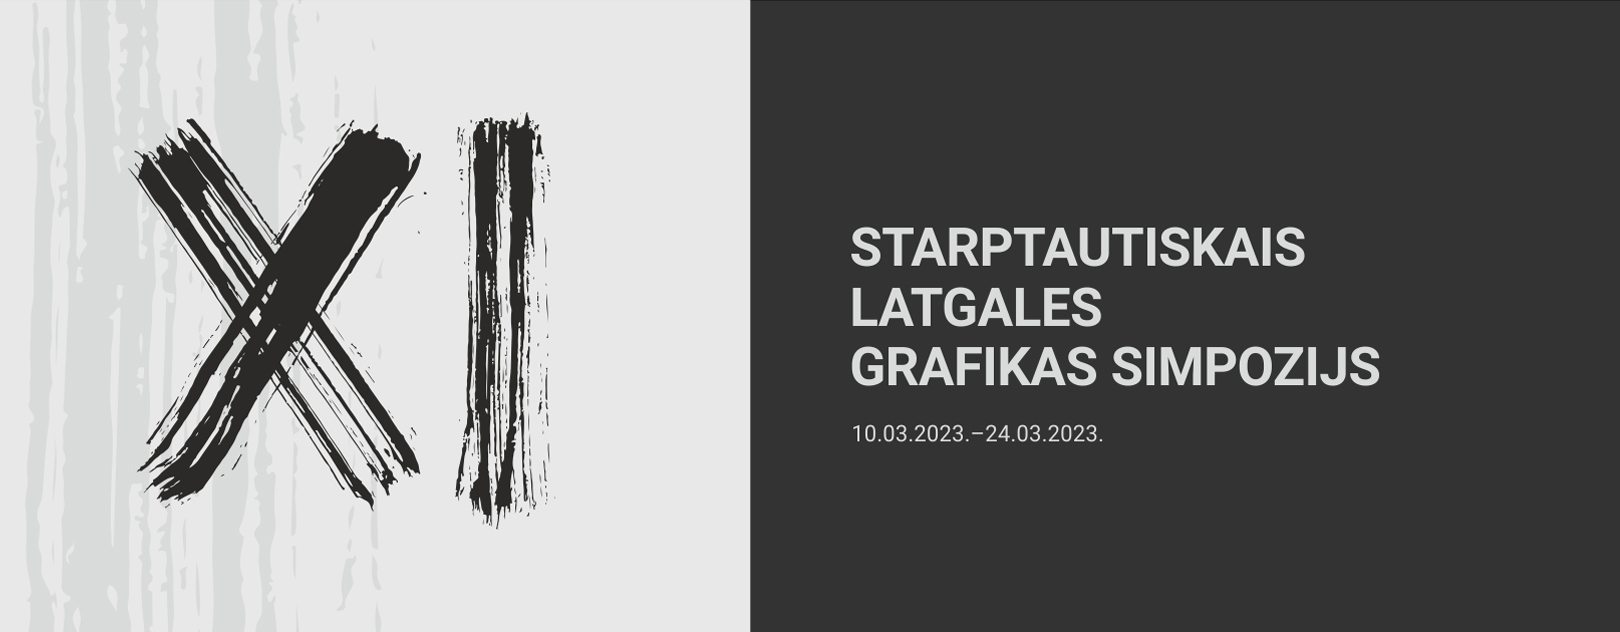 11. Starptautiskais Latgales grafikas simpozijs